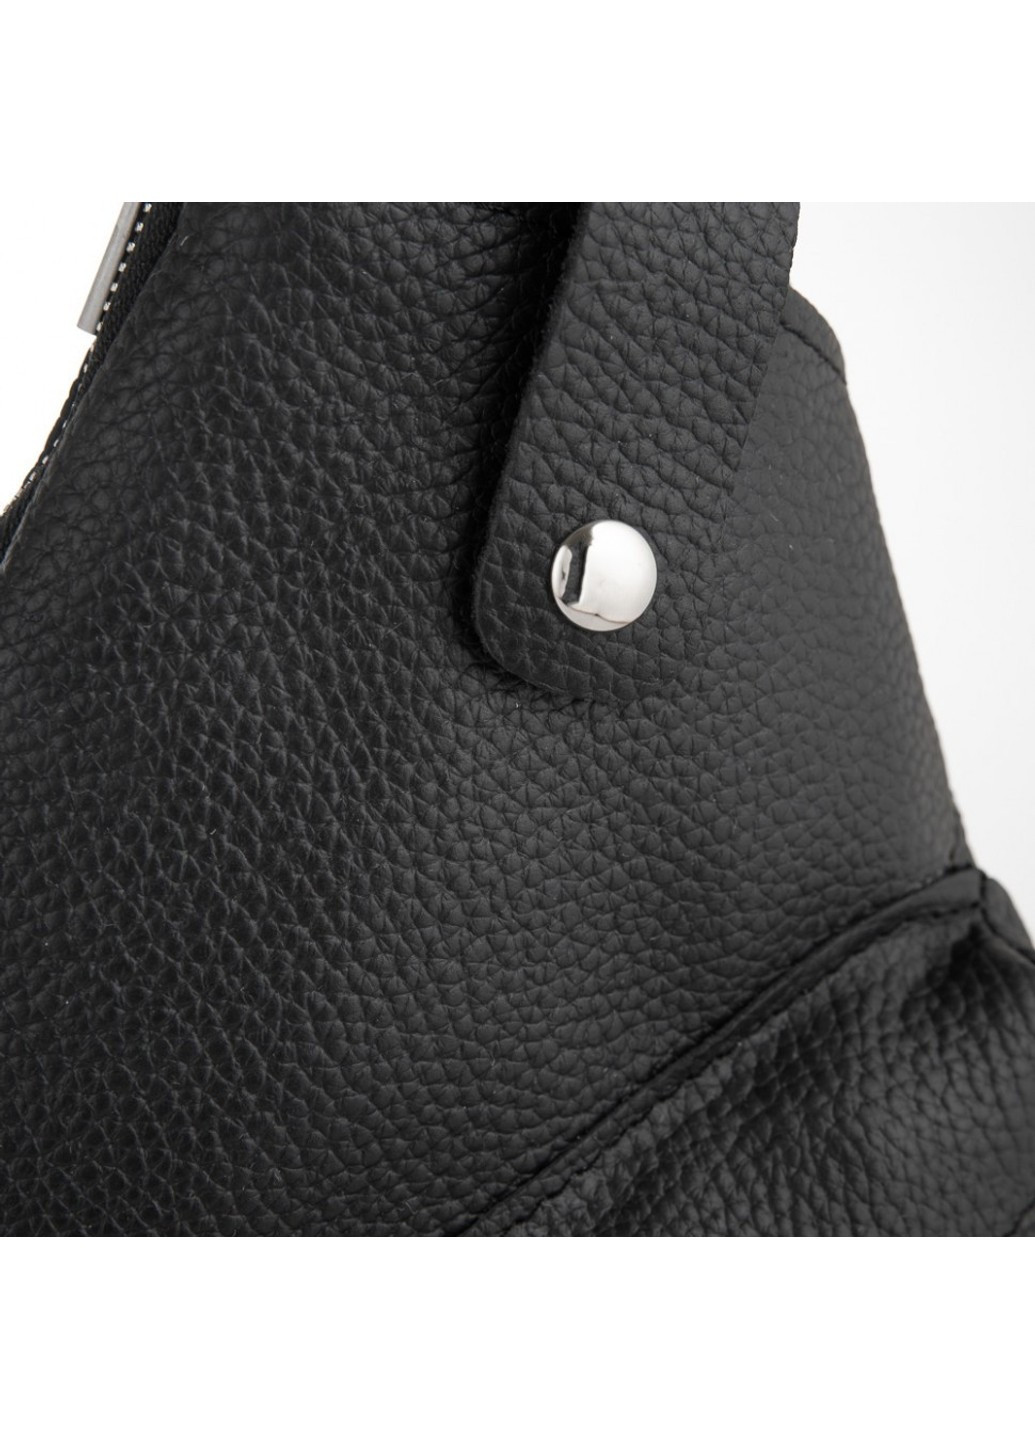 Кожаная мужская сумка слинг FA-6501-4lx бренд TARWA (272596959)